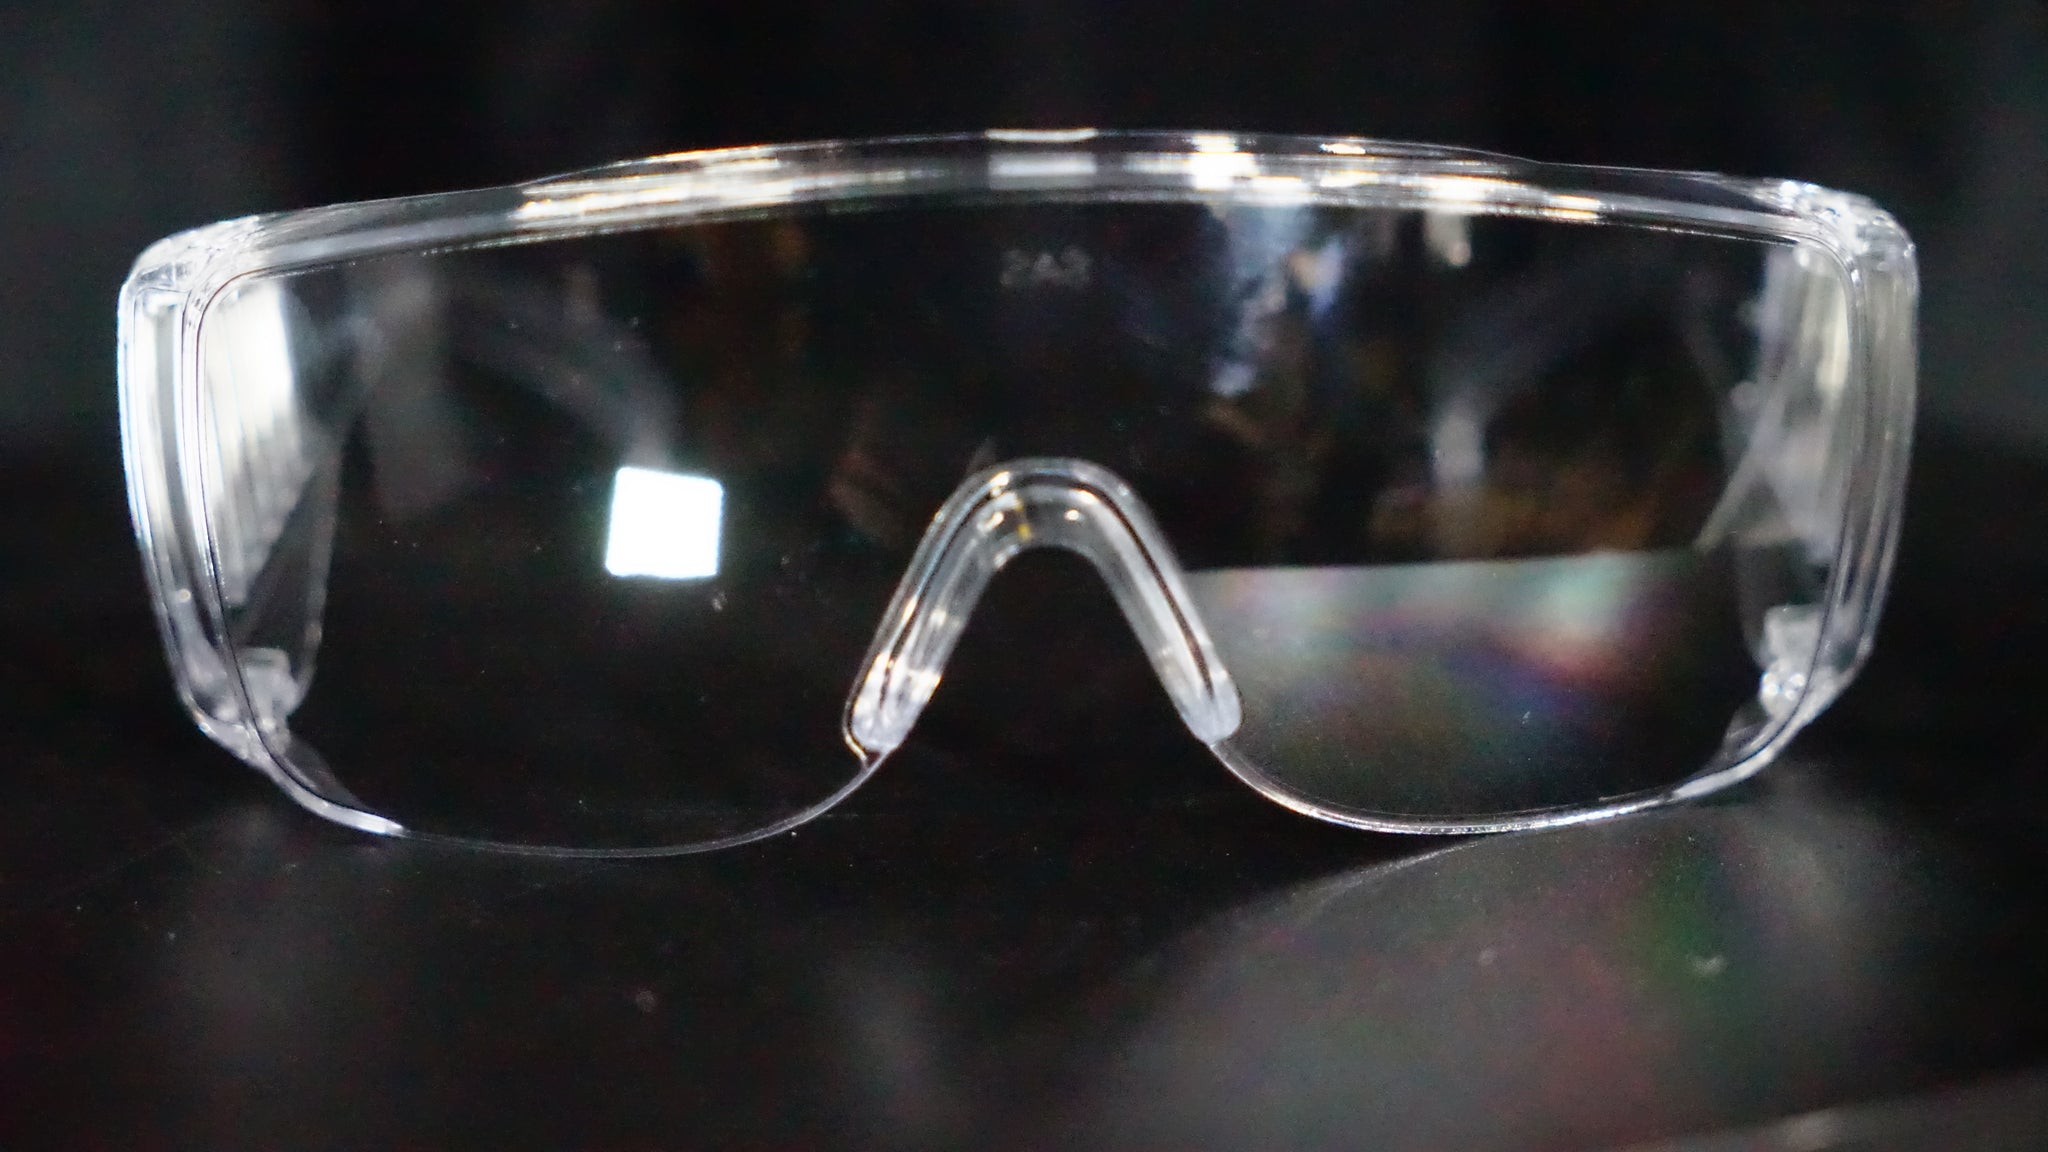 Buy 100% UV Protection Sunglasses at Best Price - Fastrack Eyewear